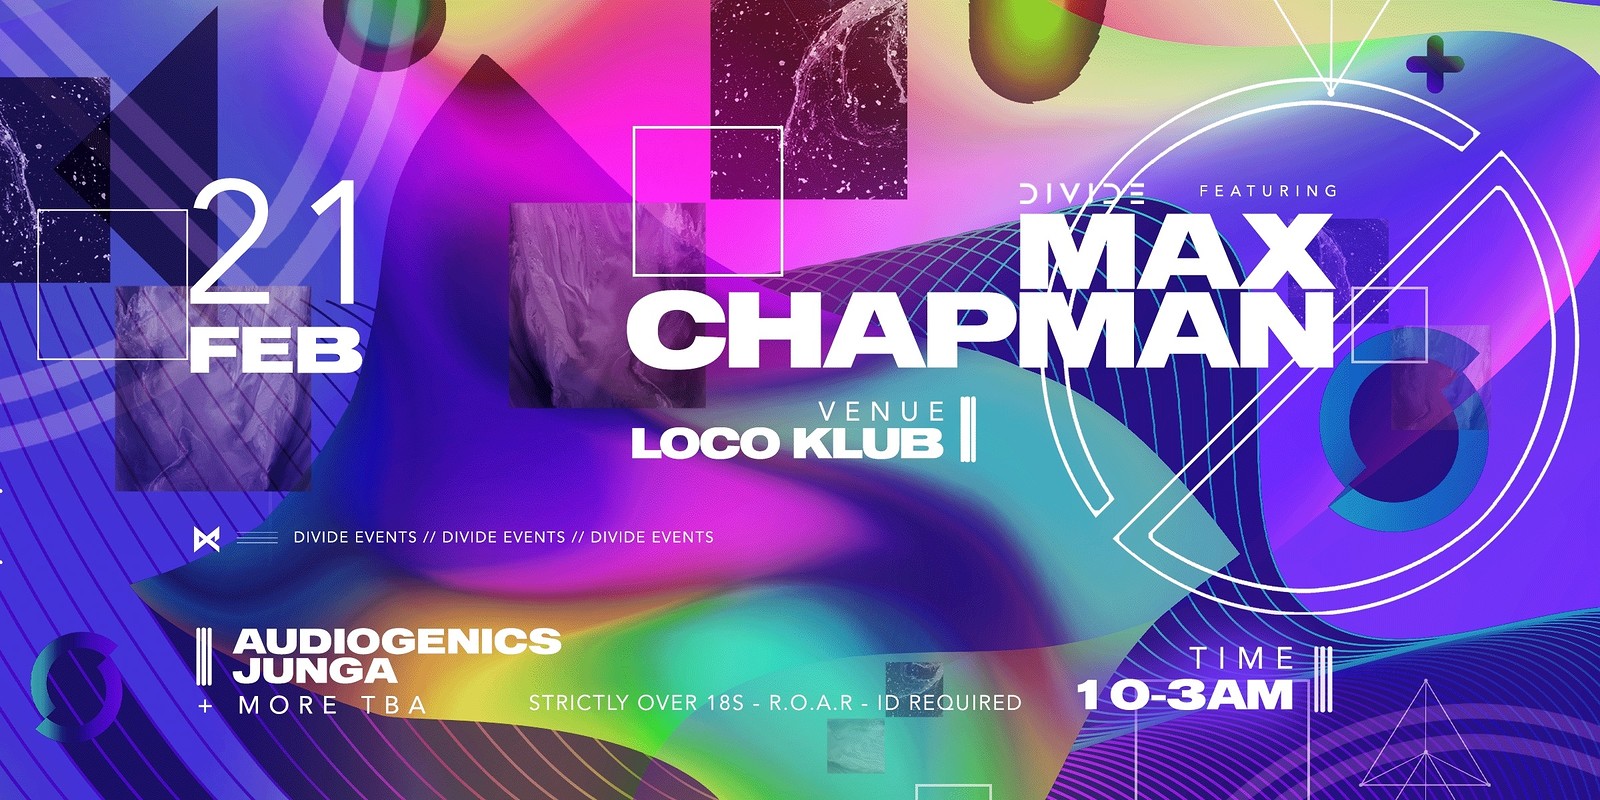 DIVIDE/ Loco Klub with: Max Chapman & more at The Loco Klub